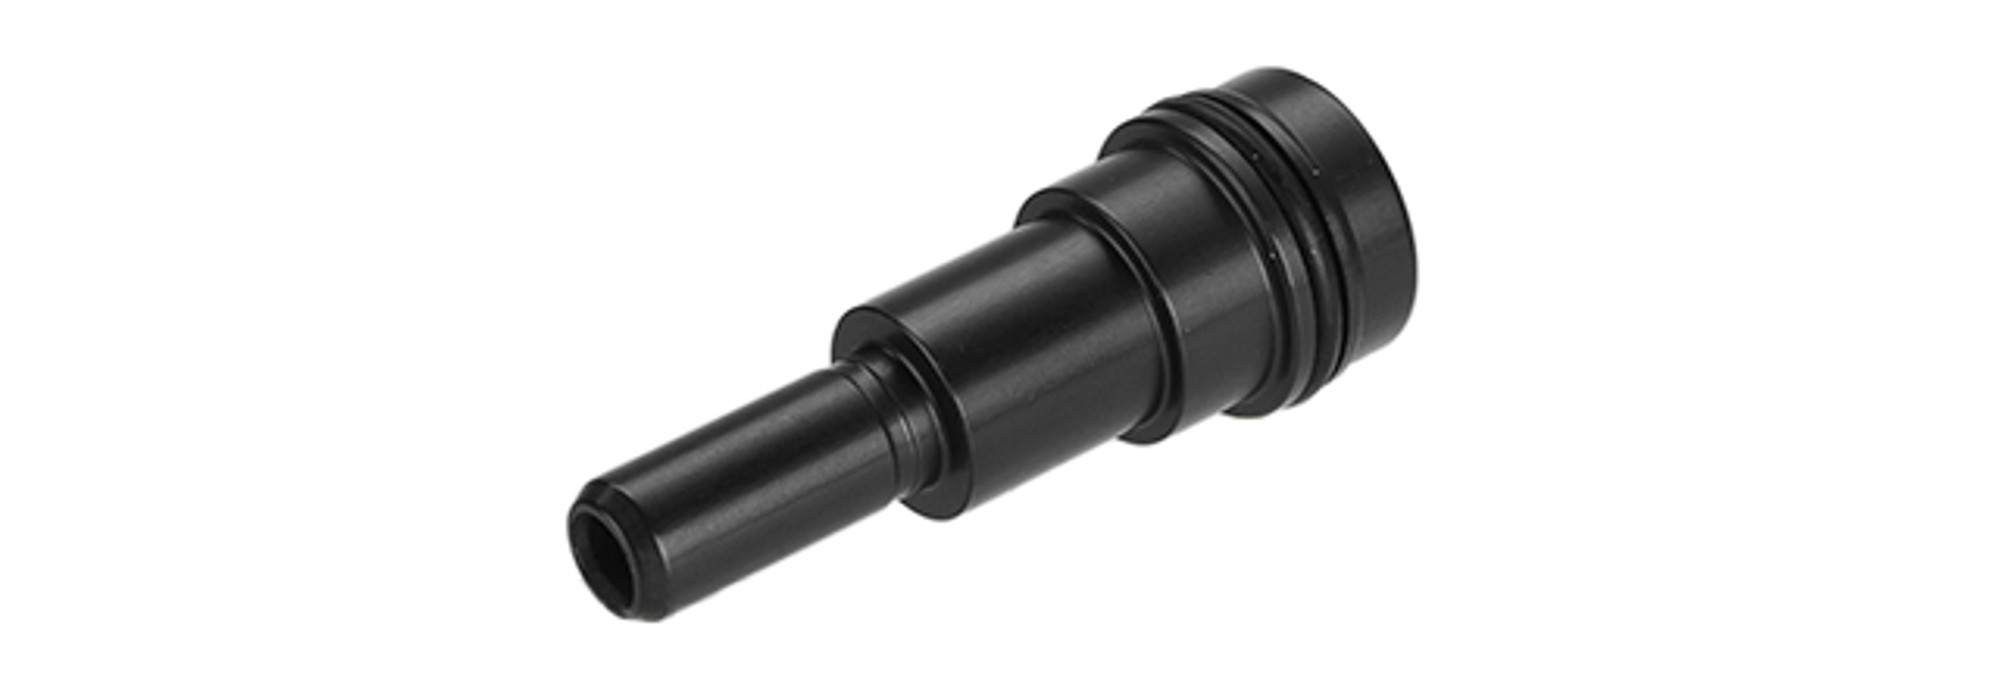 PolarStar Air Nozzle for M240 Fusion Engine Airsoft EPAR - (Color: Black)